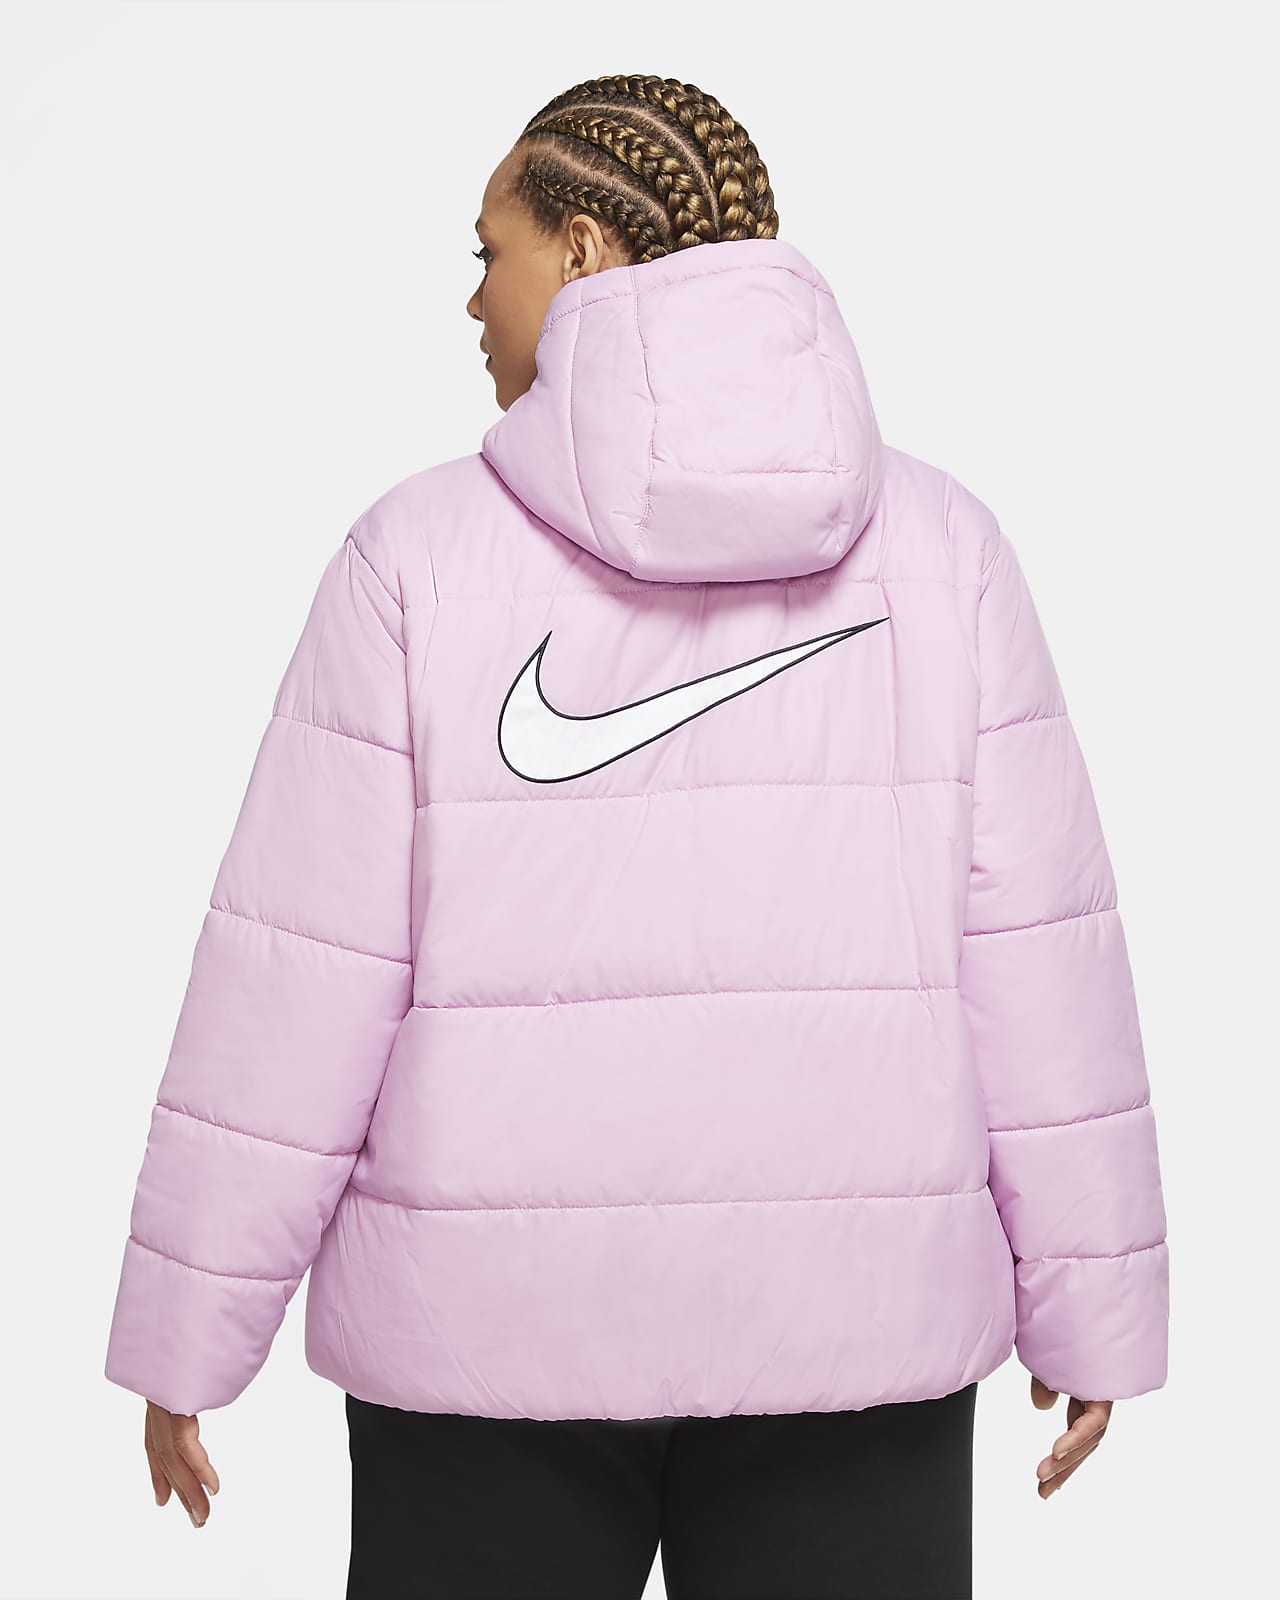 nike womens jacket pink